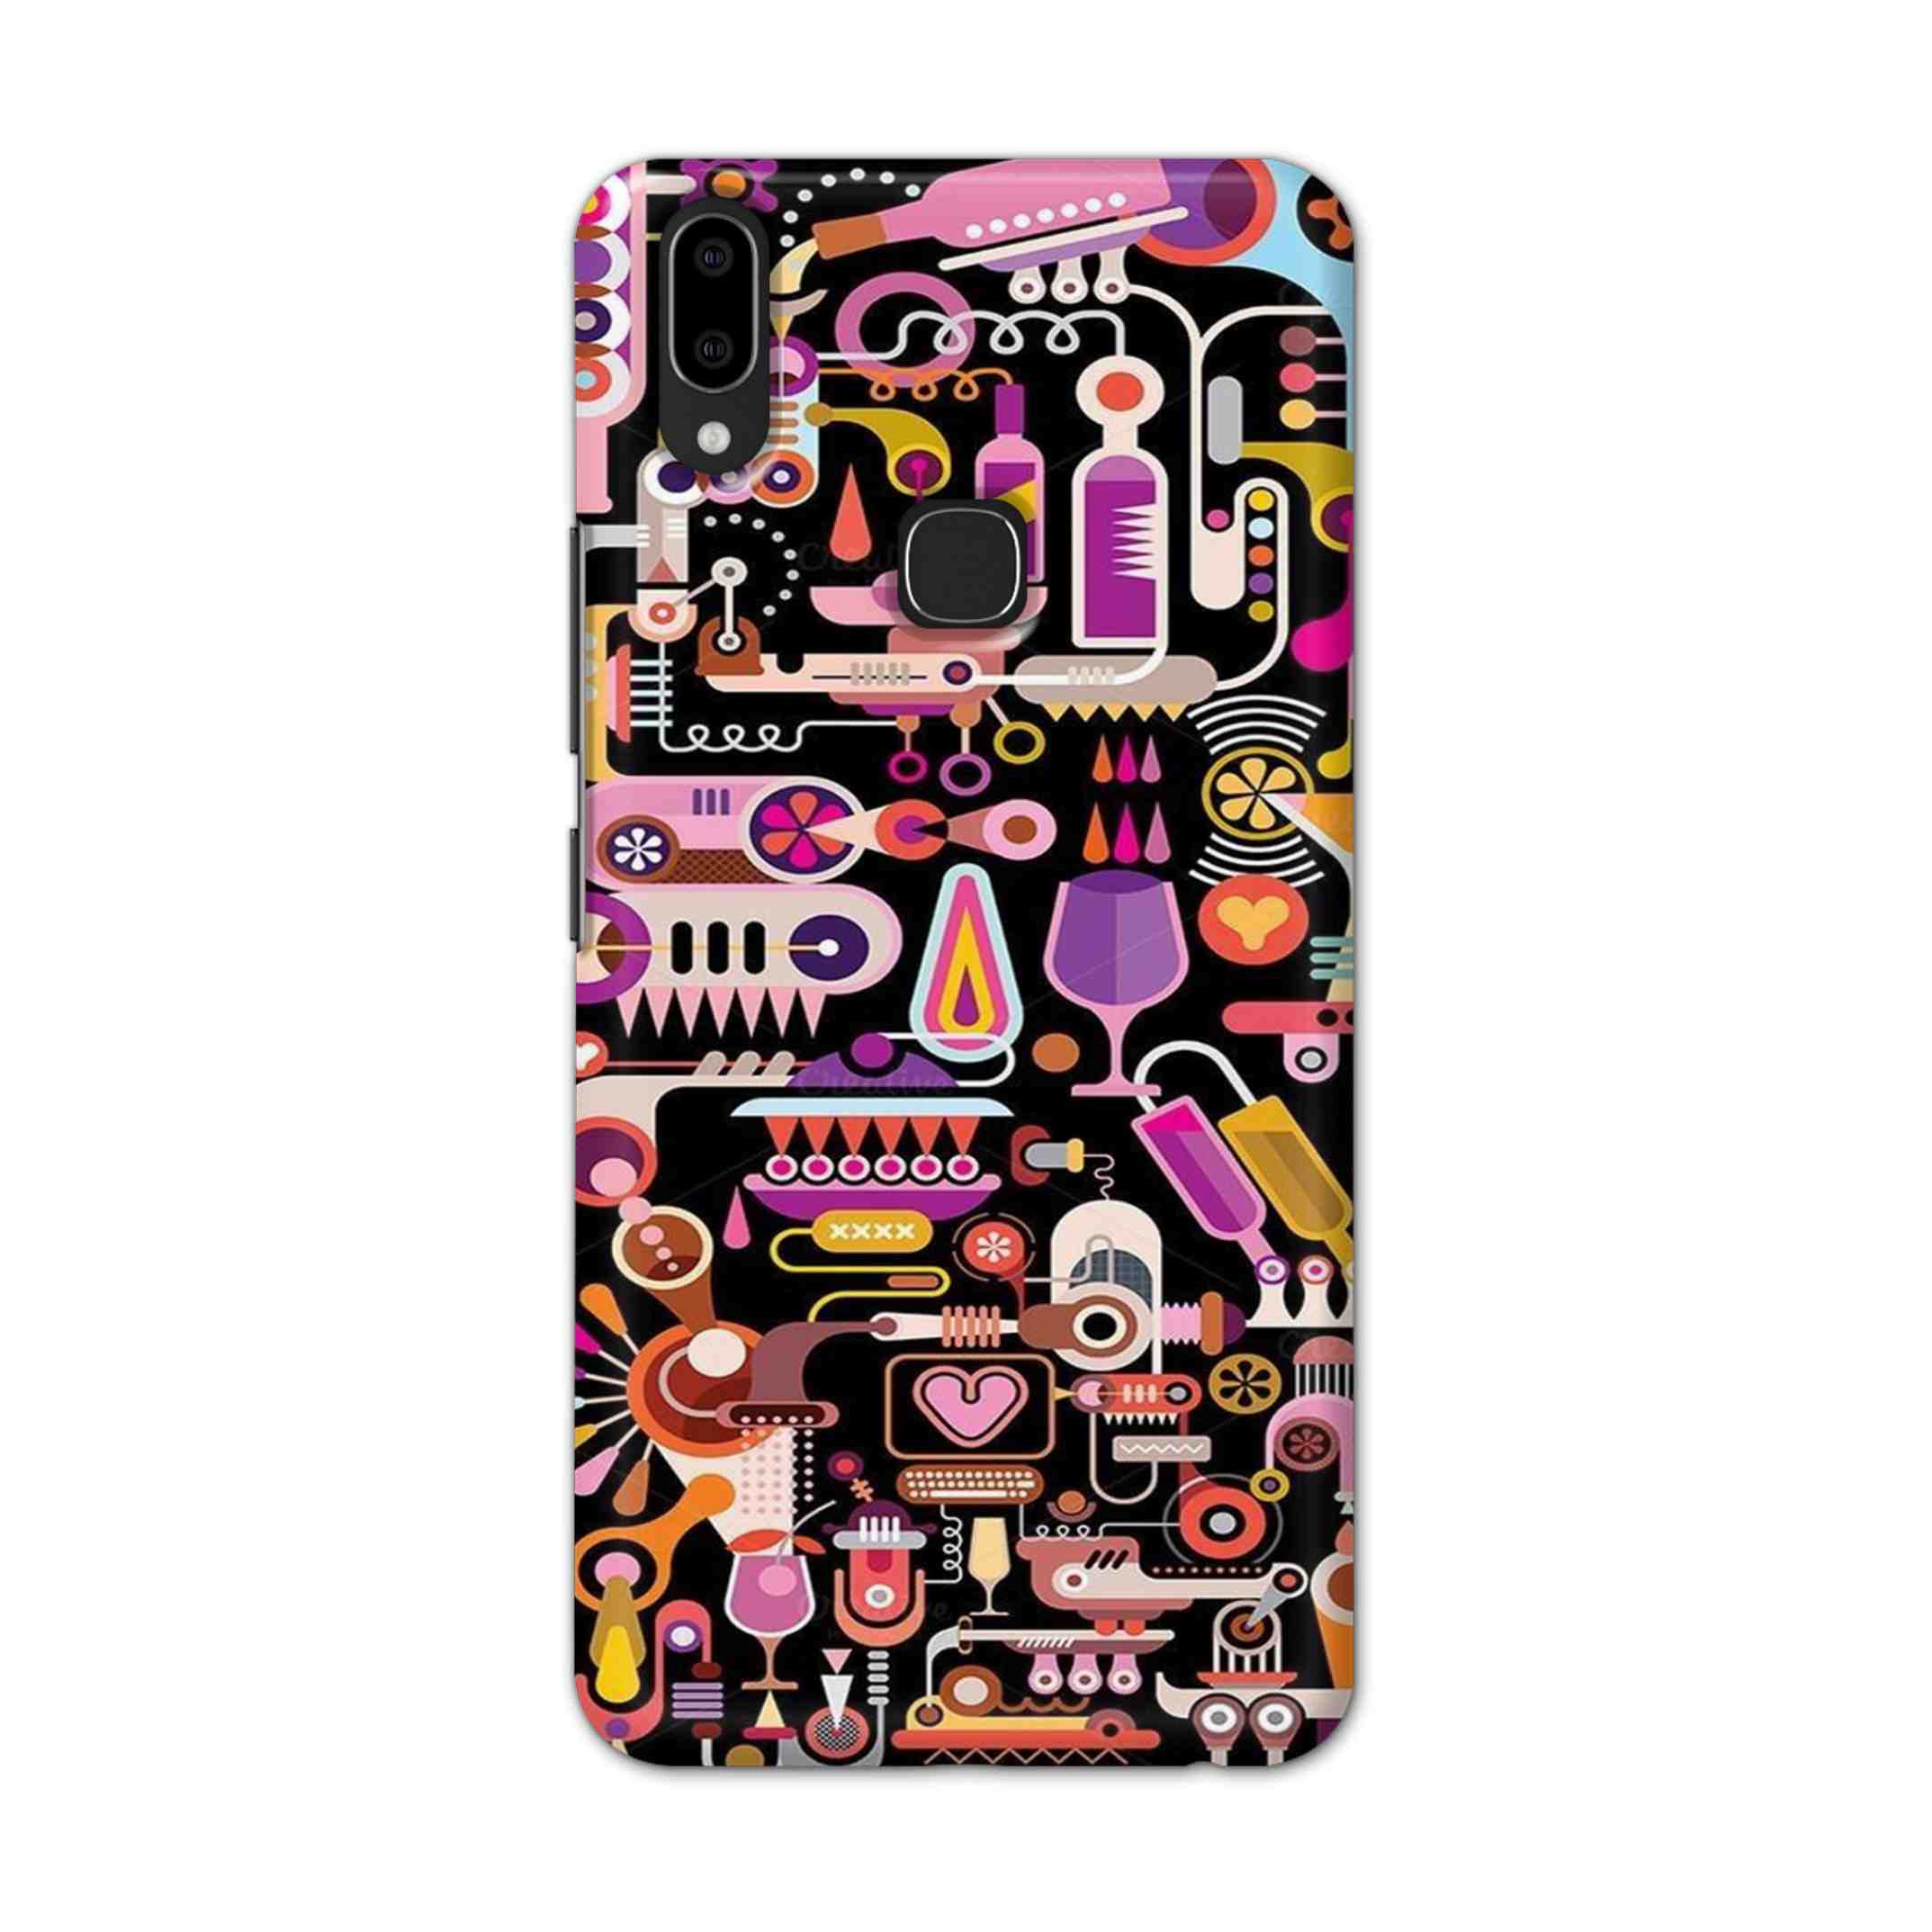 Buy Lab Art Hard Back Mobile Phone Case Cover For Vivo V9 / V9 Youth Online